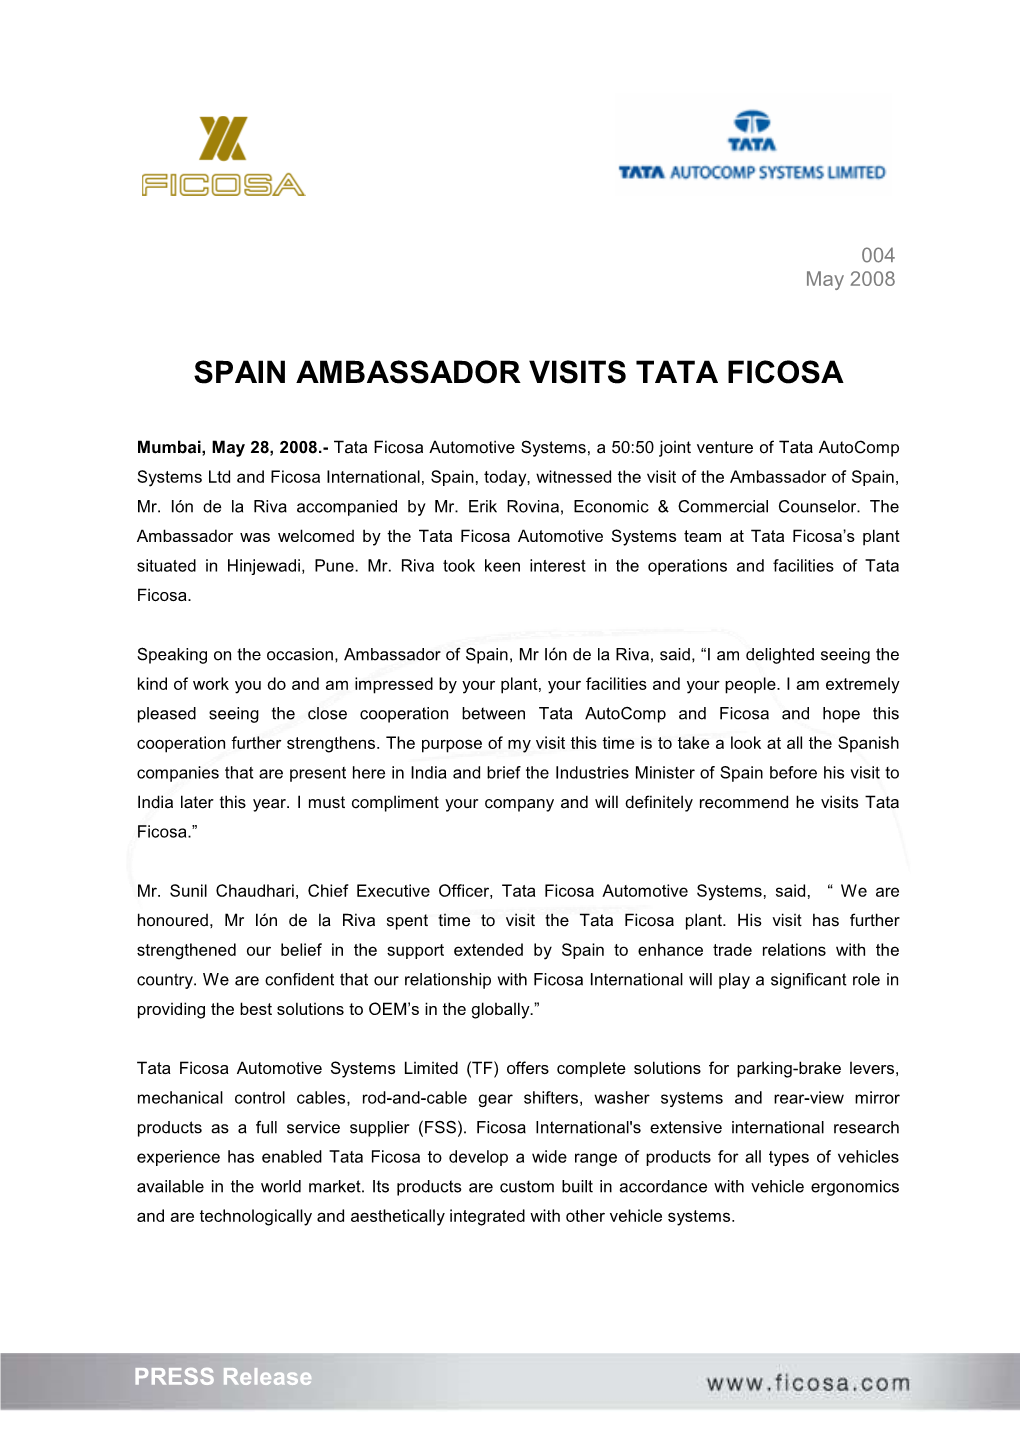 Spain Ambassador Visits Tata Ficosa